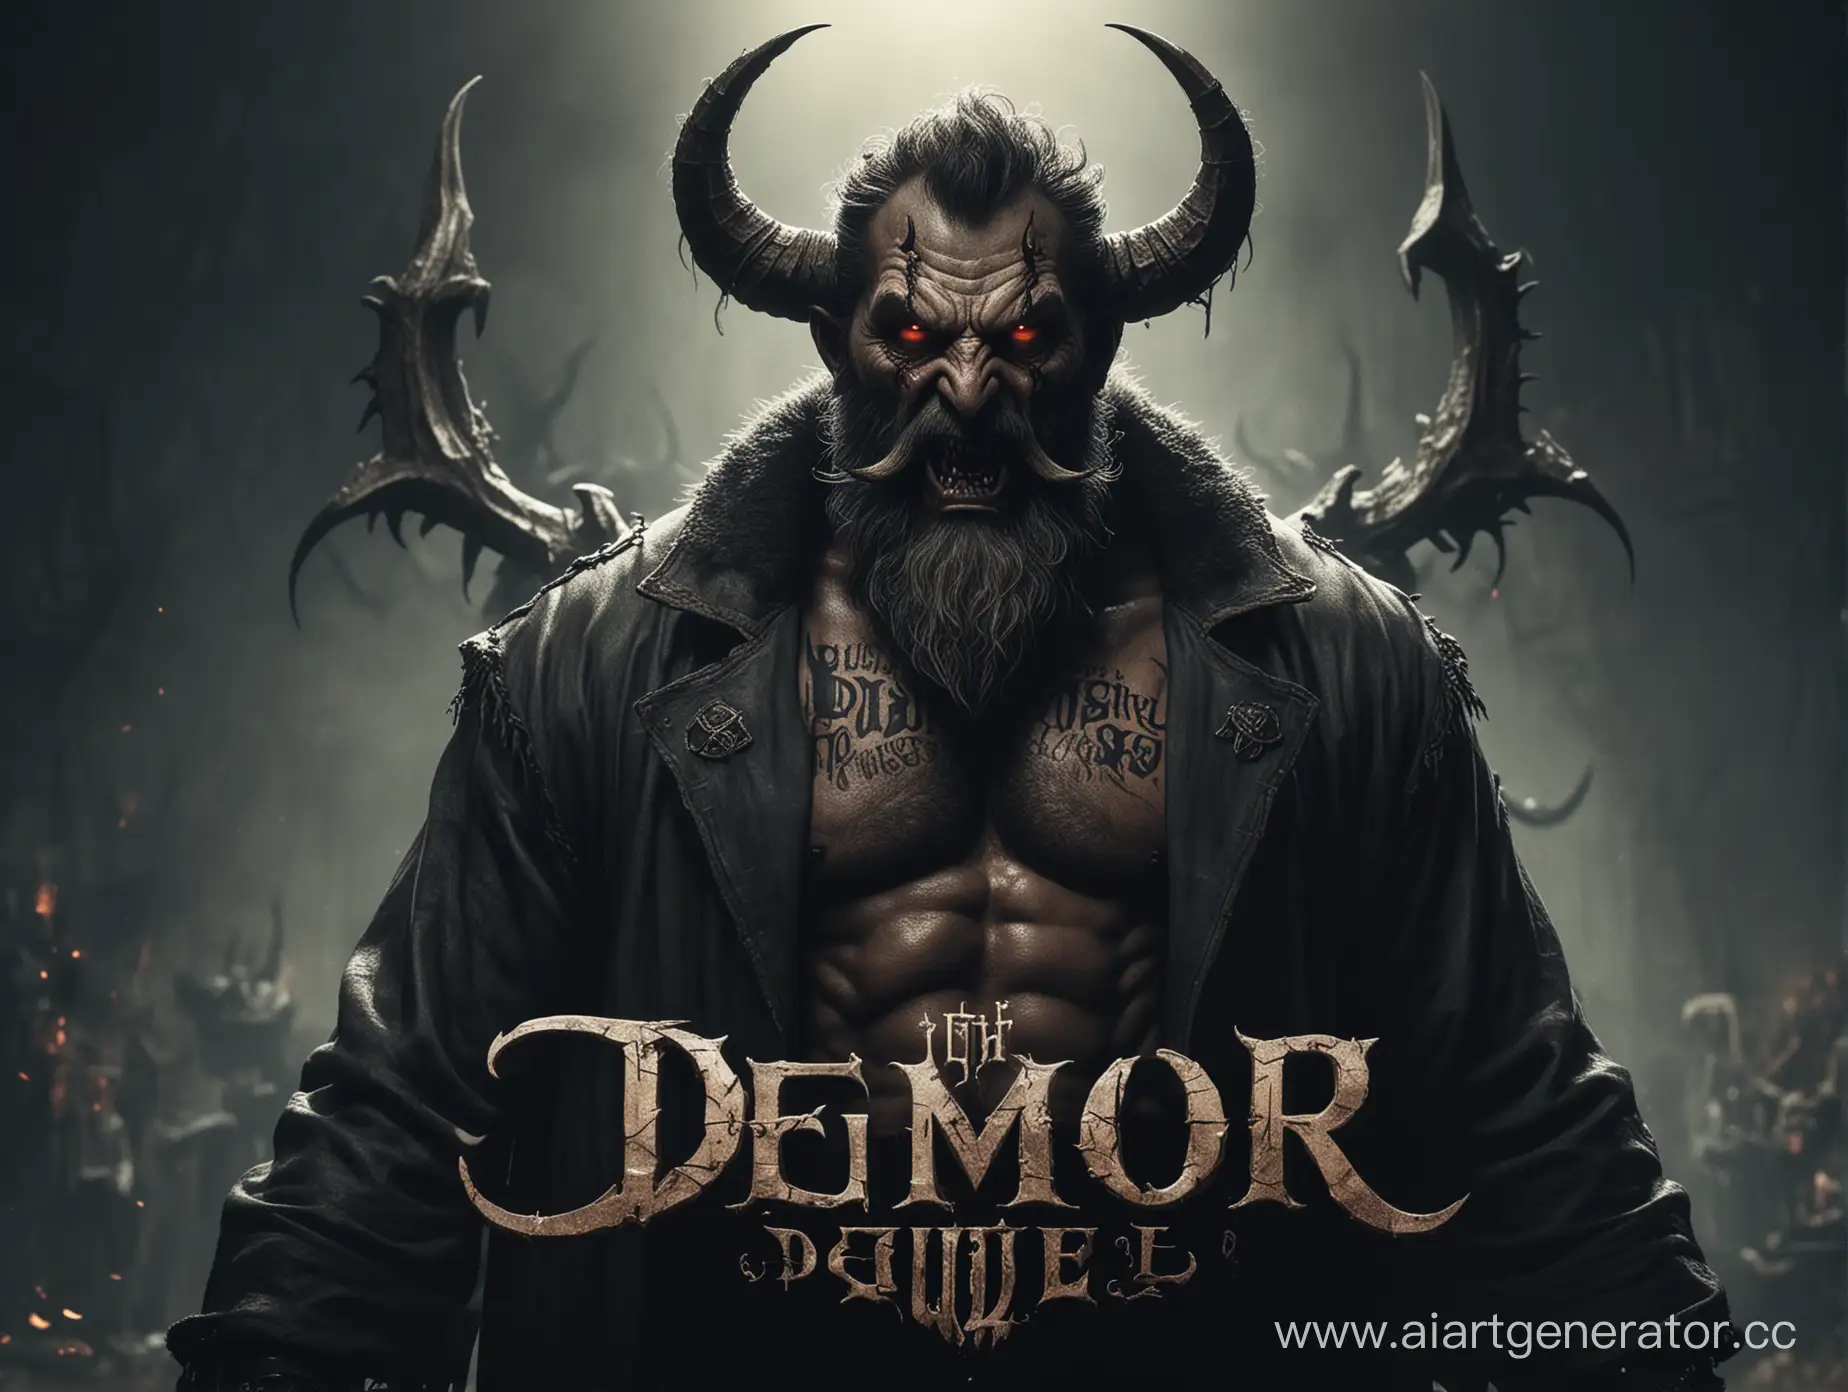 Gumer-Demon-with-Beard-and-Hellish-Chest-Inscription